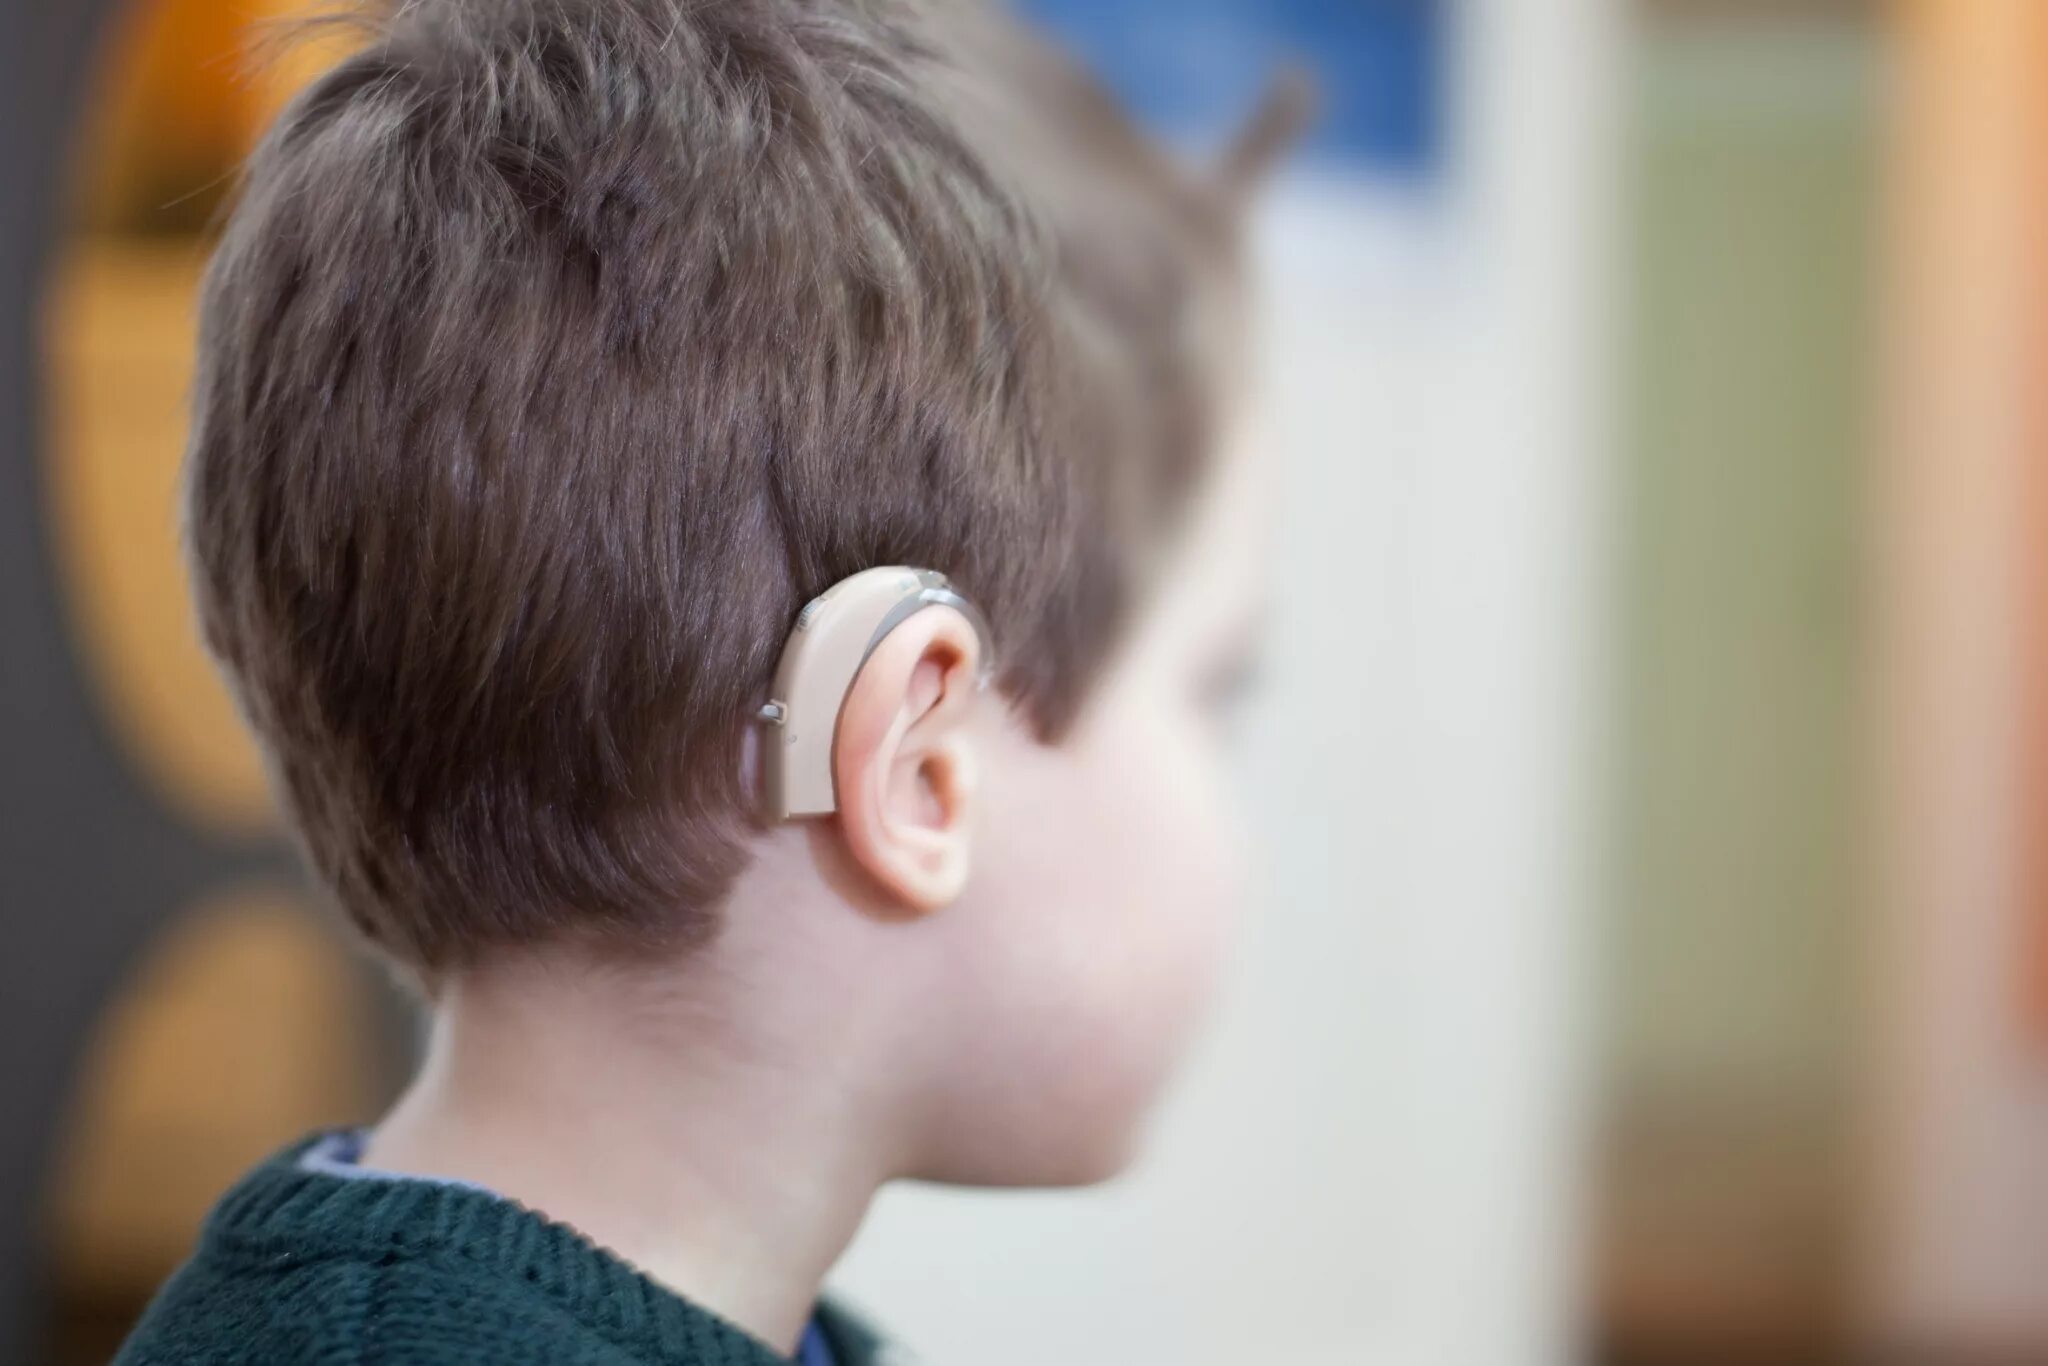 Коррекция нарушения слуха. Аппарат для глухих кохлеарная имплантация. Аппарат Cochlear кохлеарный. Слуховой аппарат Cochlear 8. Кохлеарный имплант Кохлер.